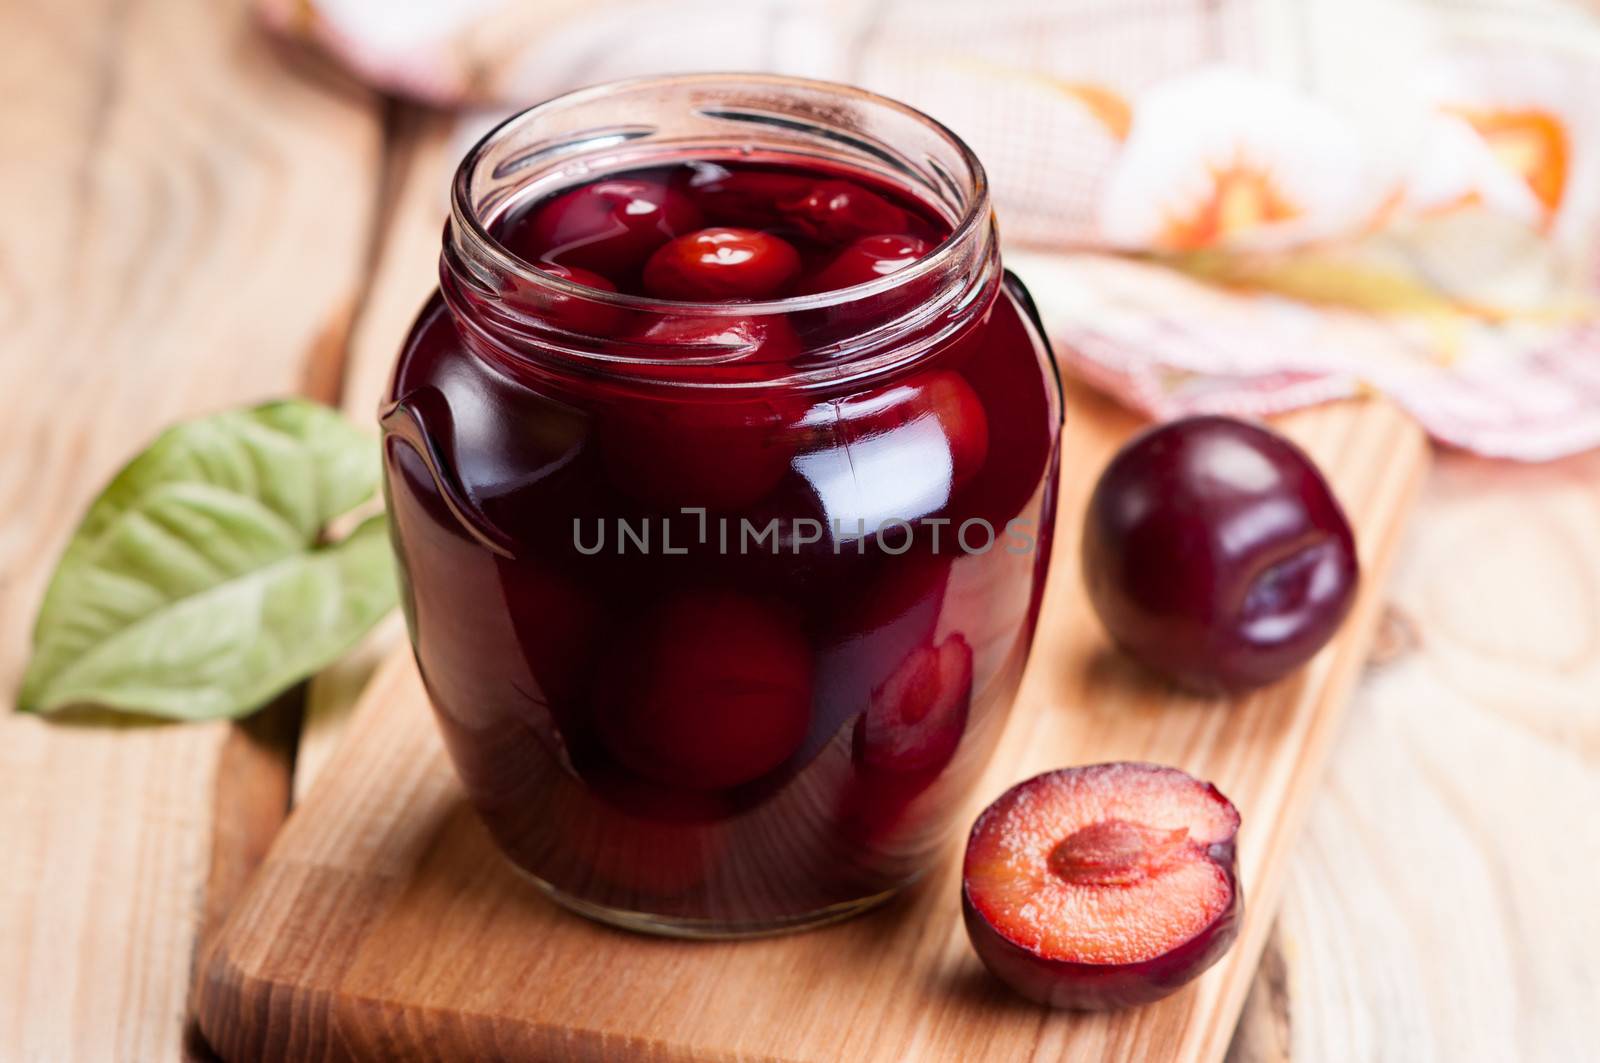 Homemade plum jam in glass jar on wooden table.